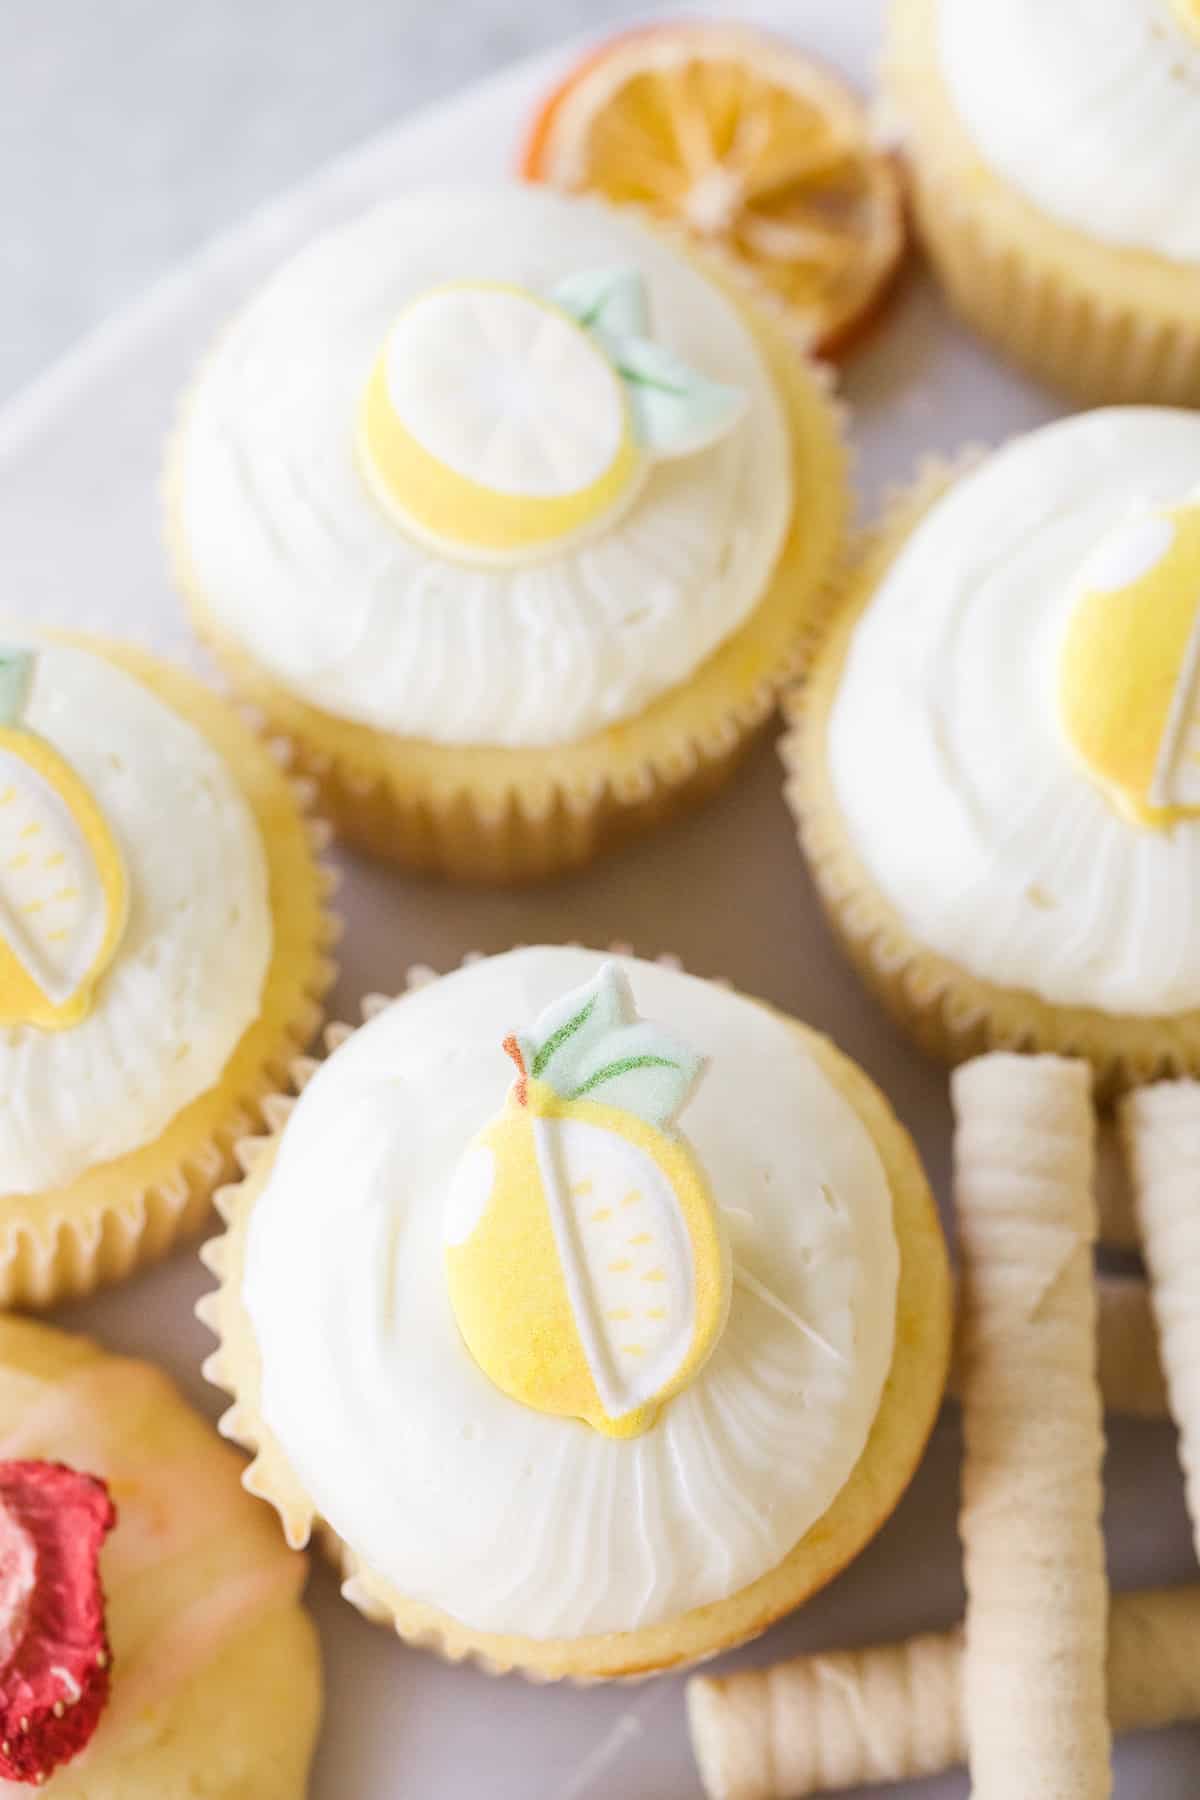 Lemon cupcakes and desserts.